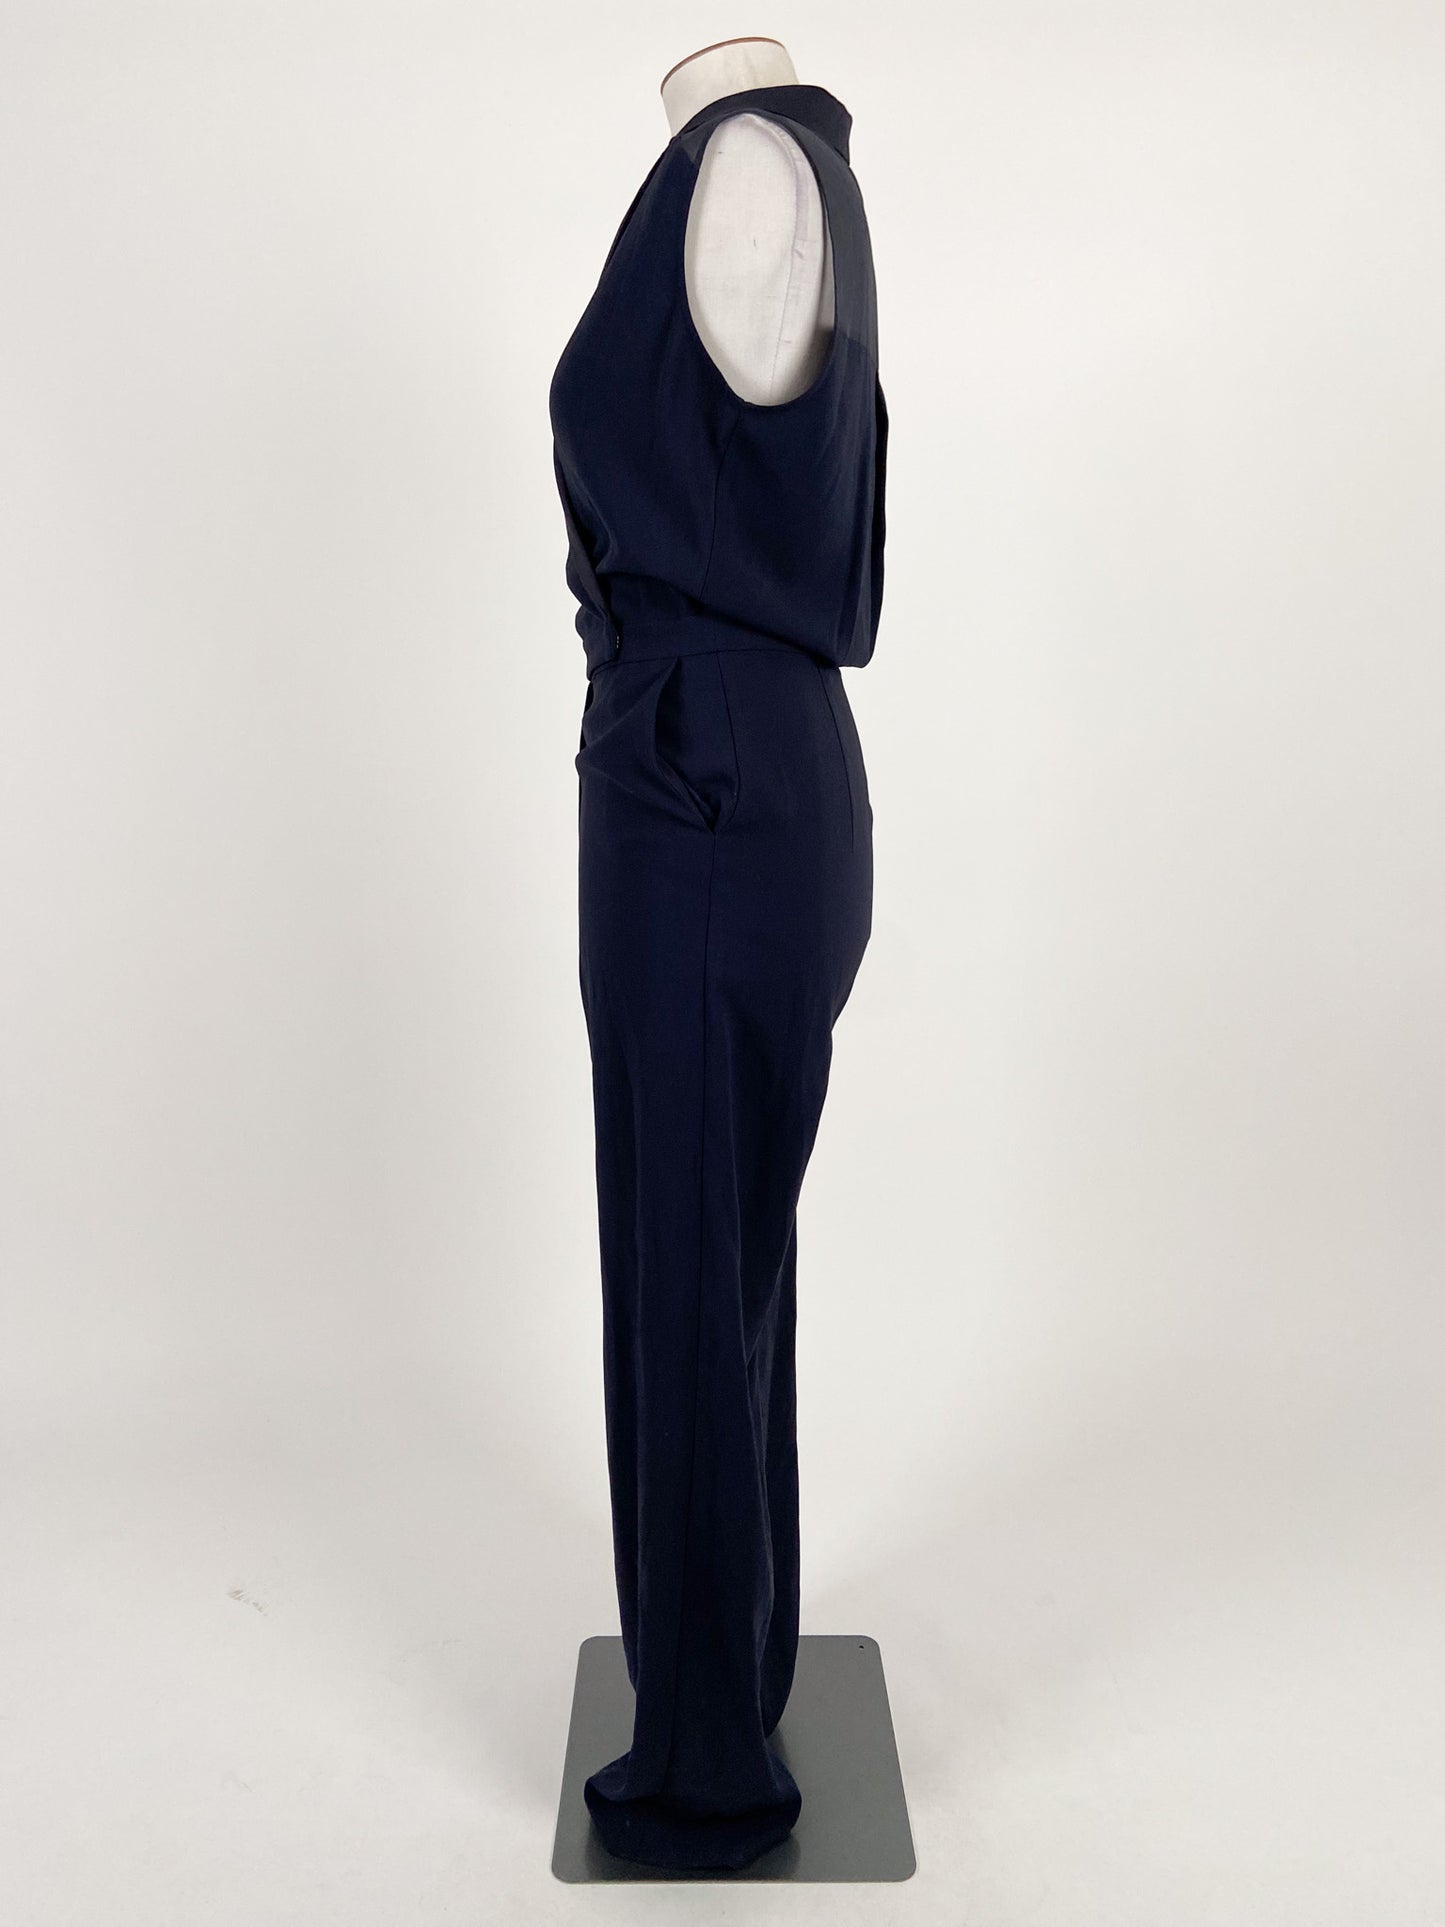 Reiss | Navy Workwear Jumpsuit | Size 10